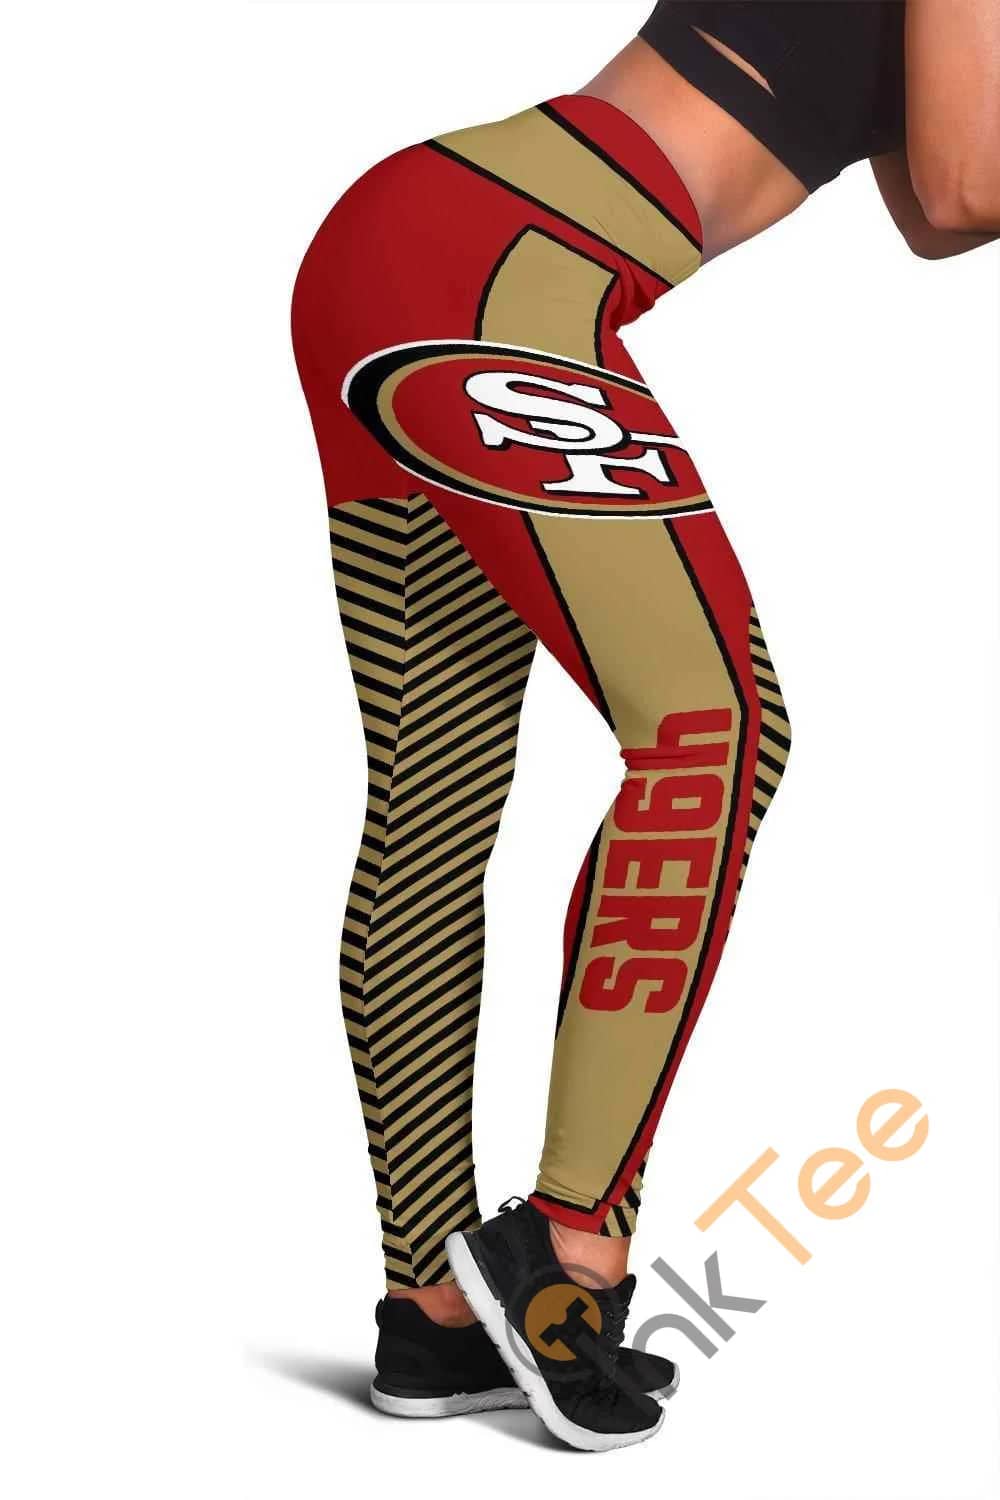 San Francisco 49ers Leggings Thematic Logo yoga running workout